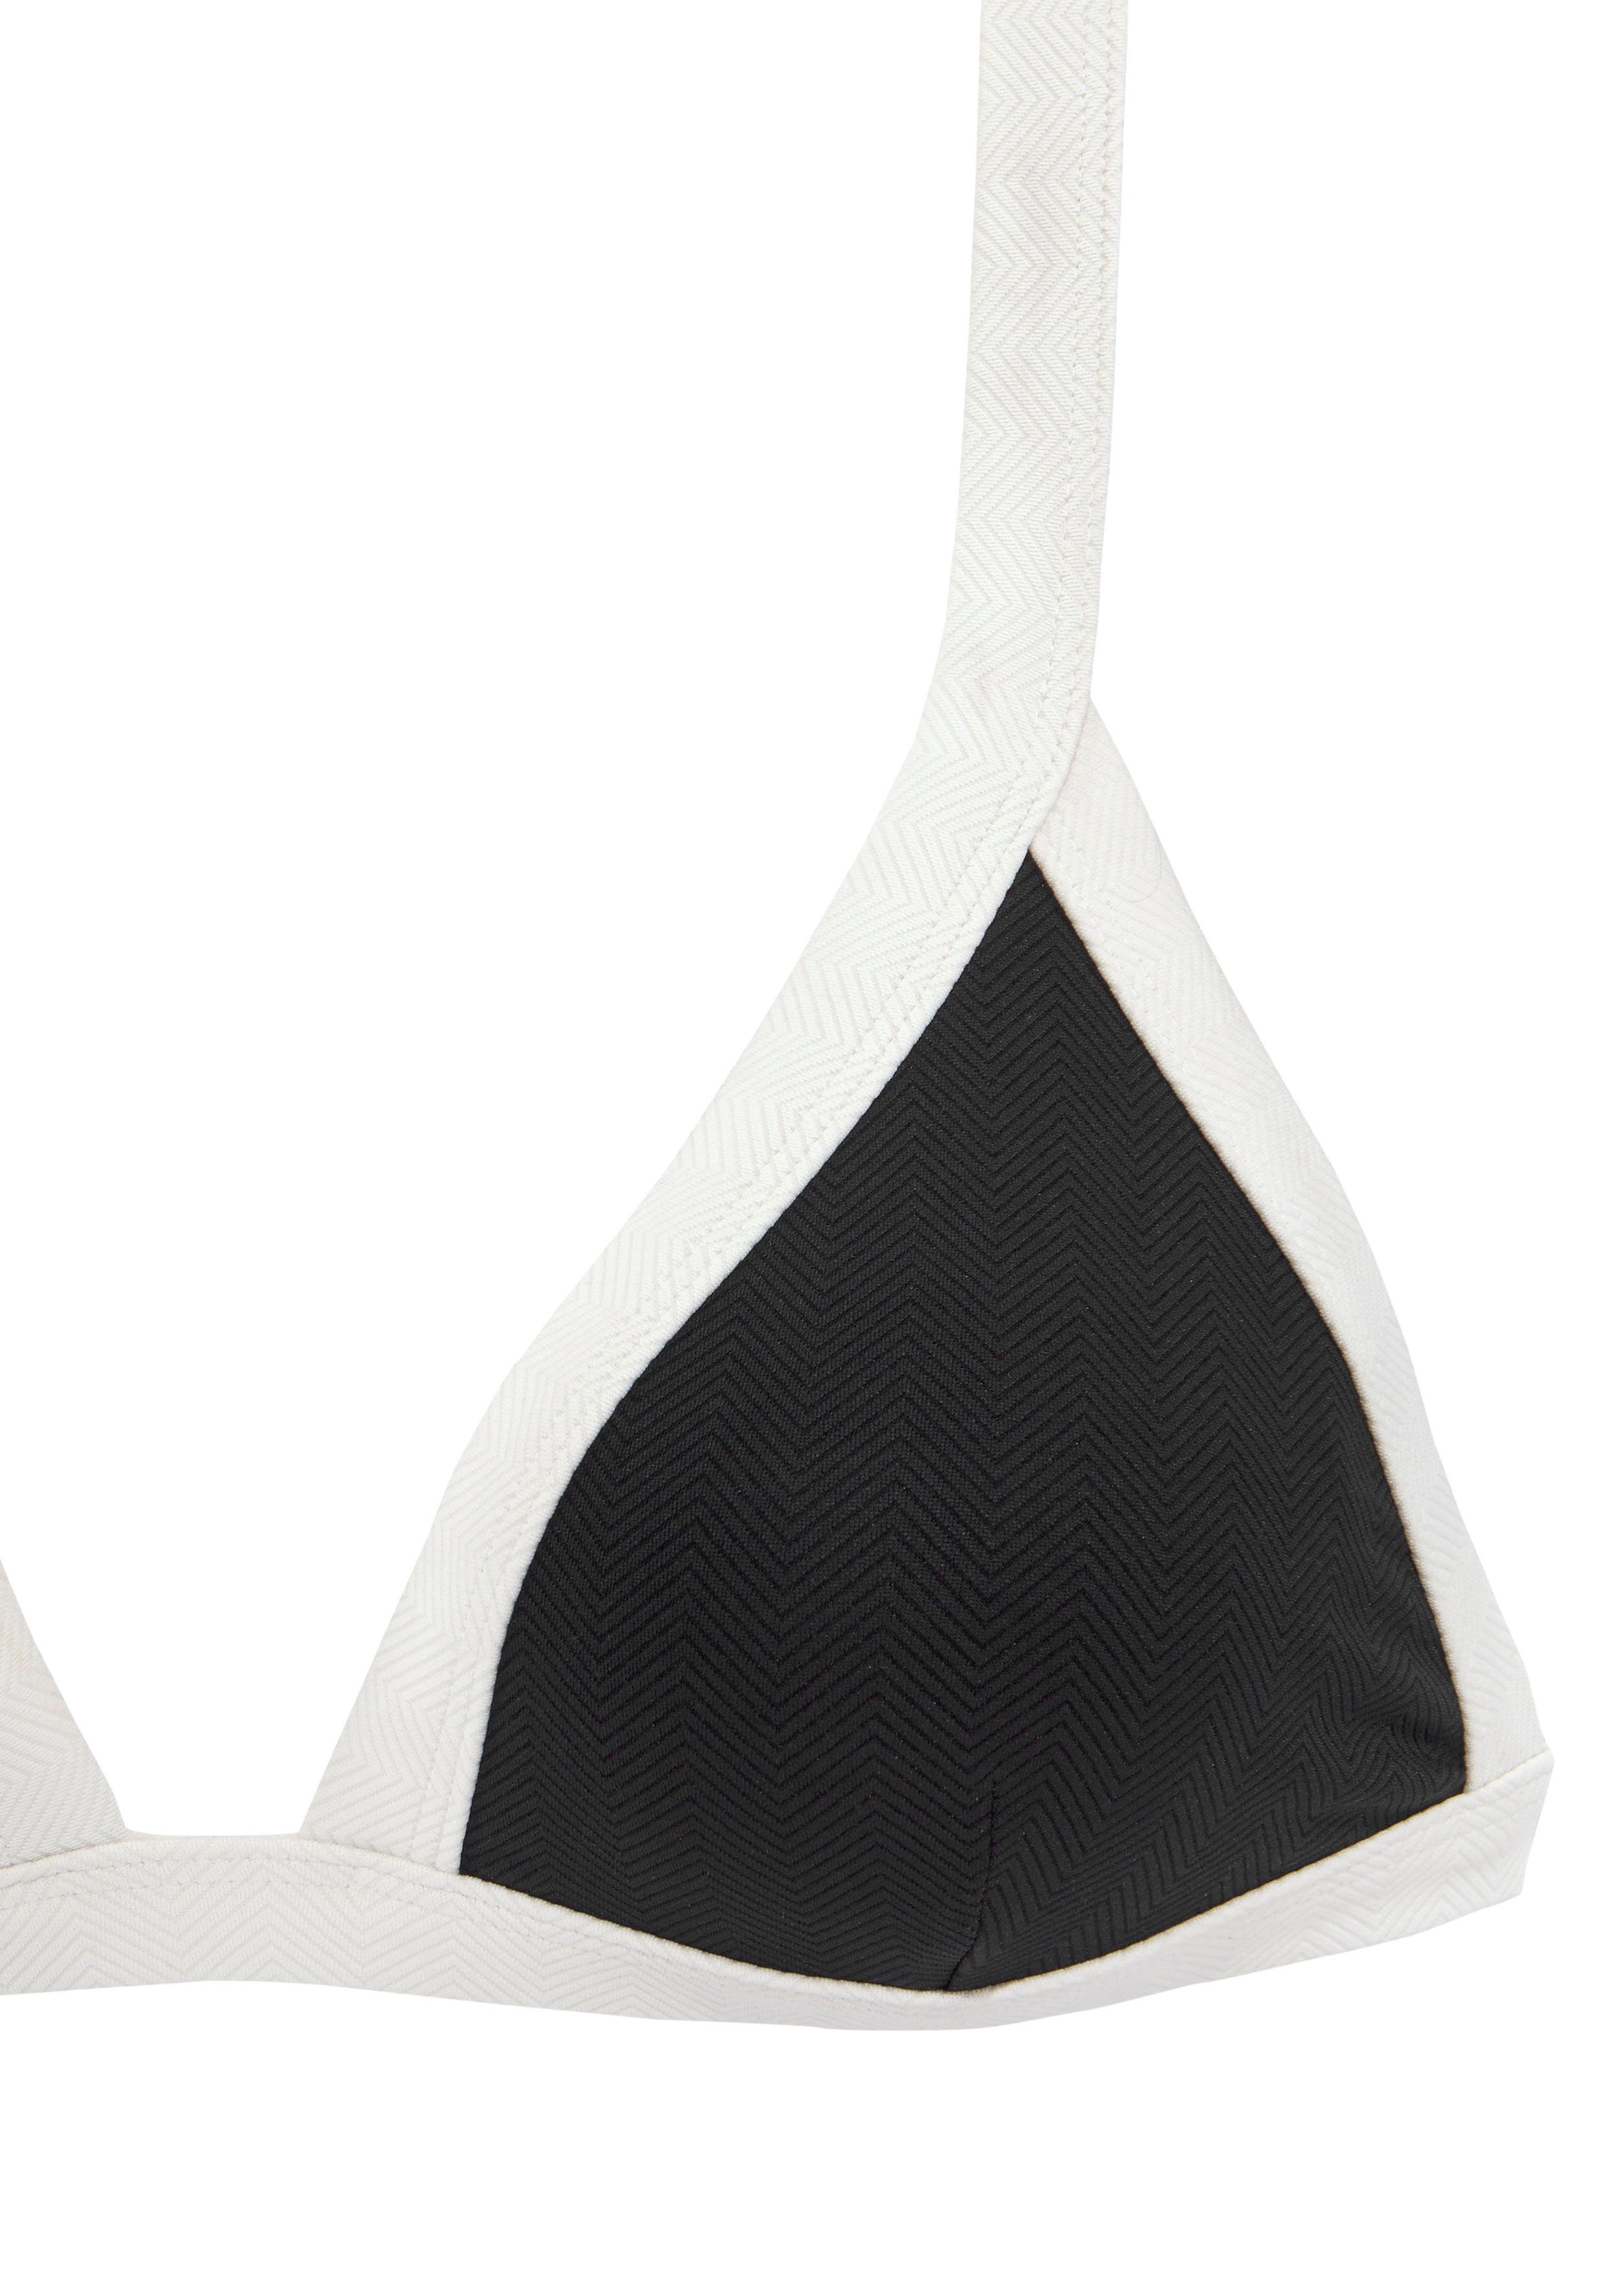 Venice Beach Triangel-Bikini aus strukturierem Material schwarz-weiß